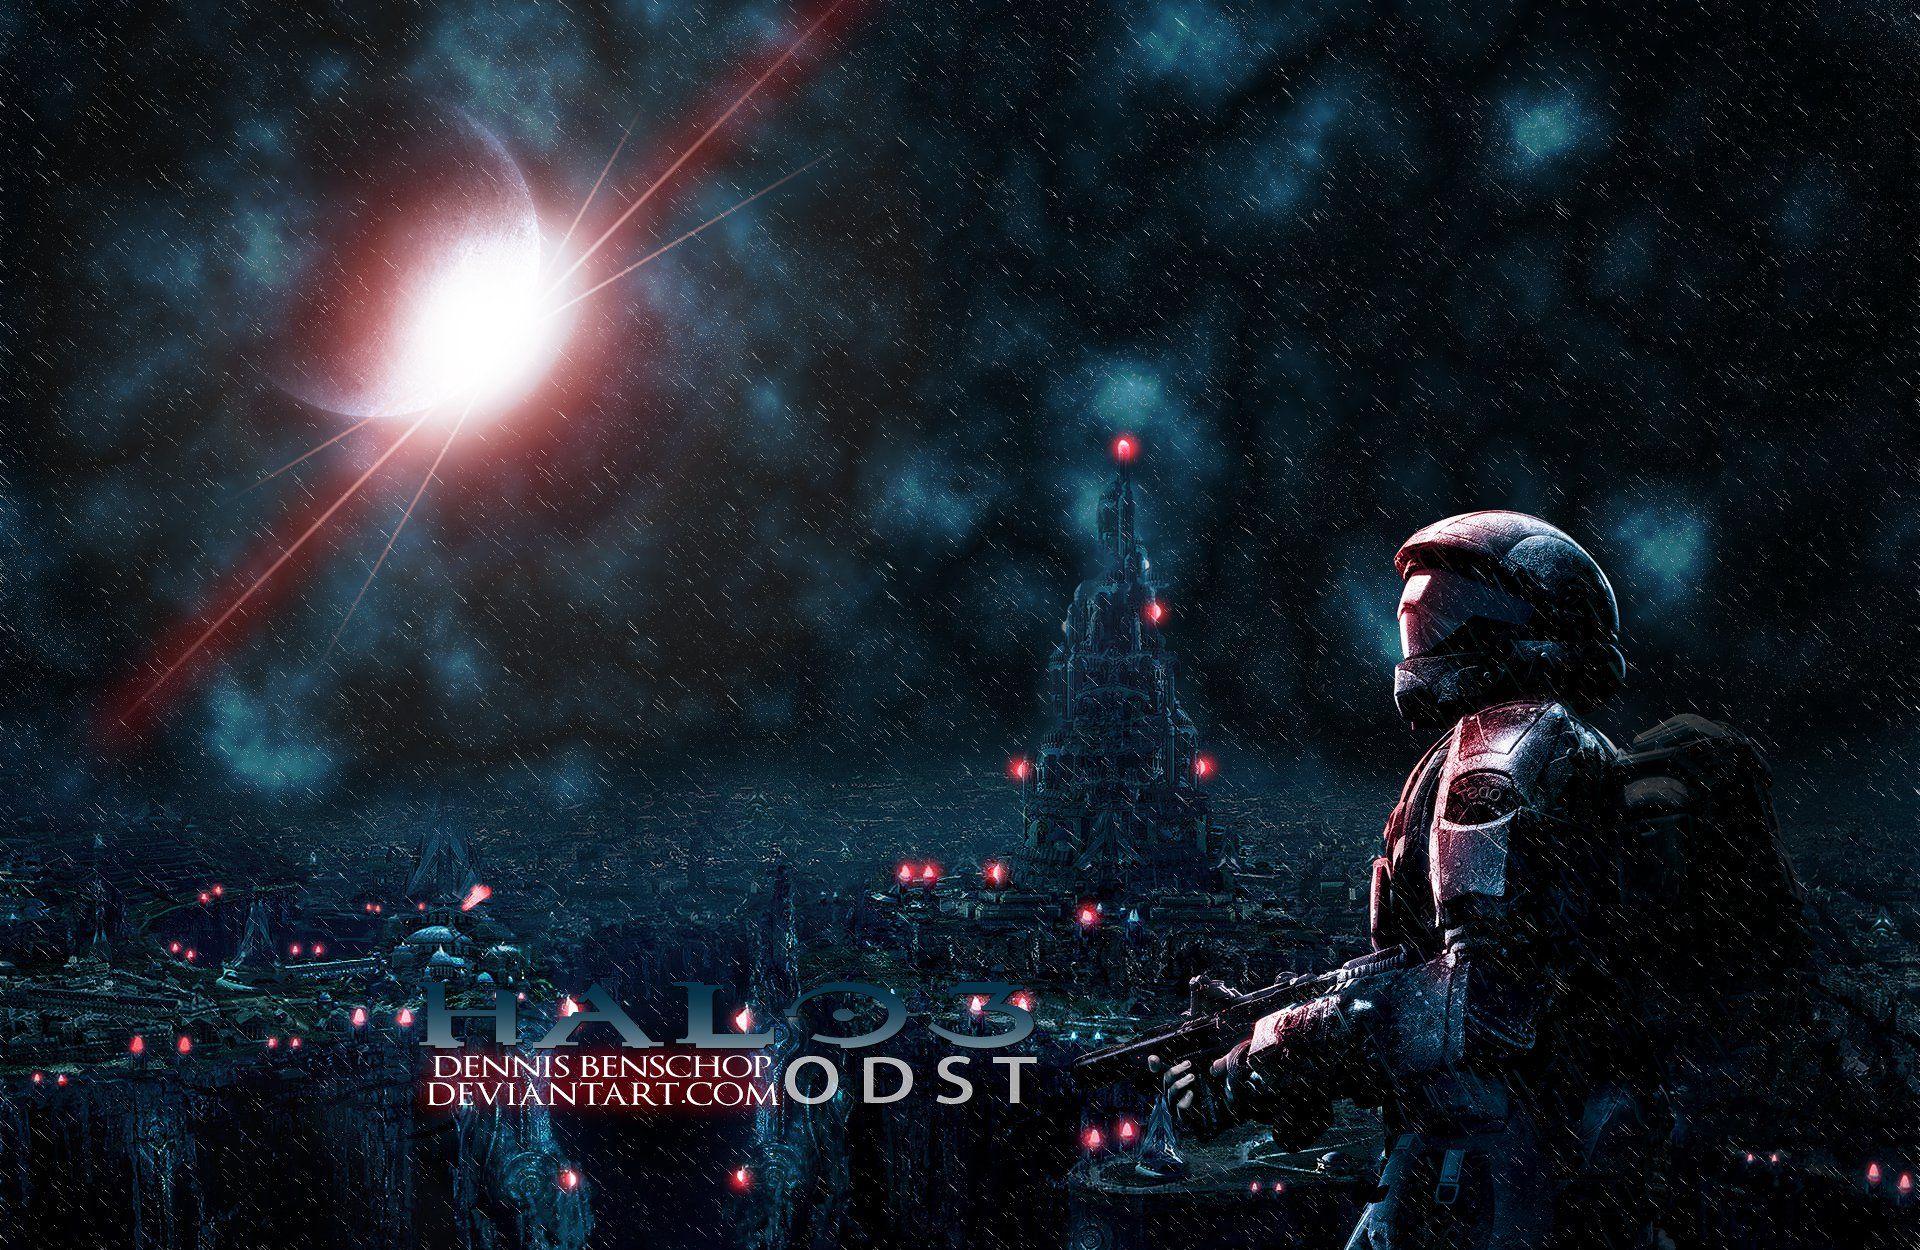 Halo3:ODST Wallpaper By Dennis Benschop